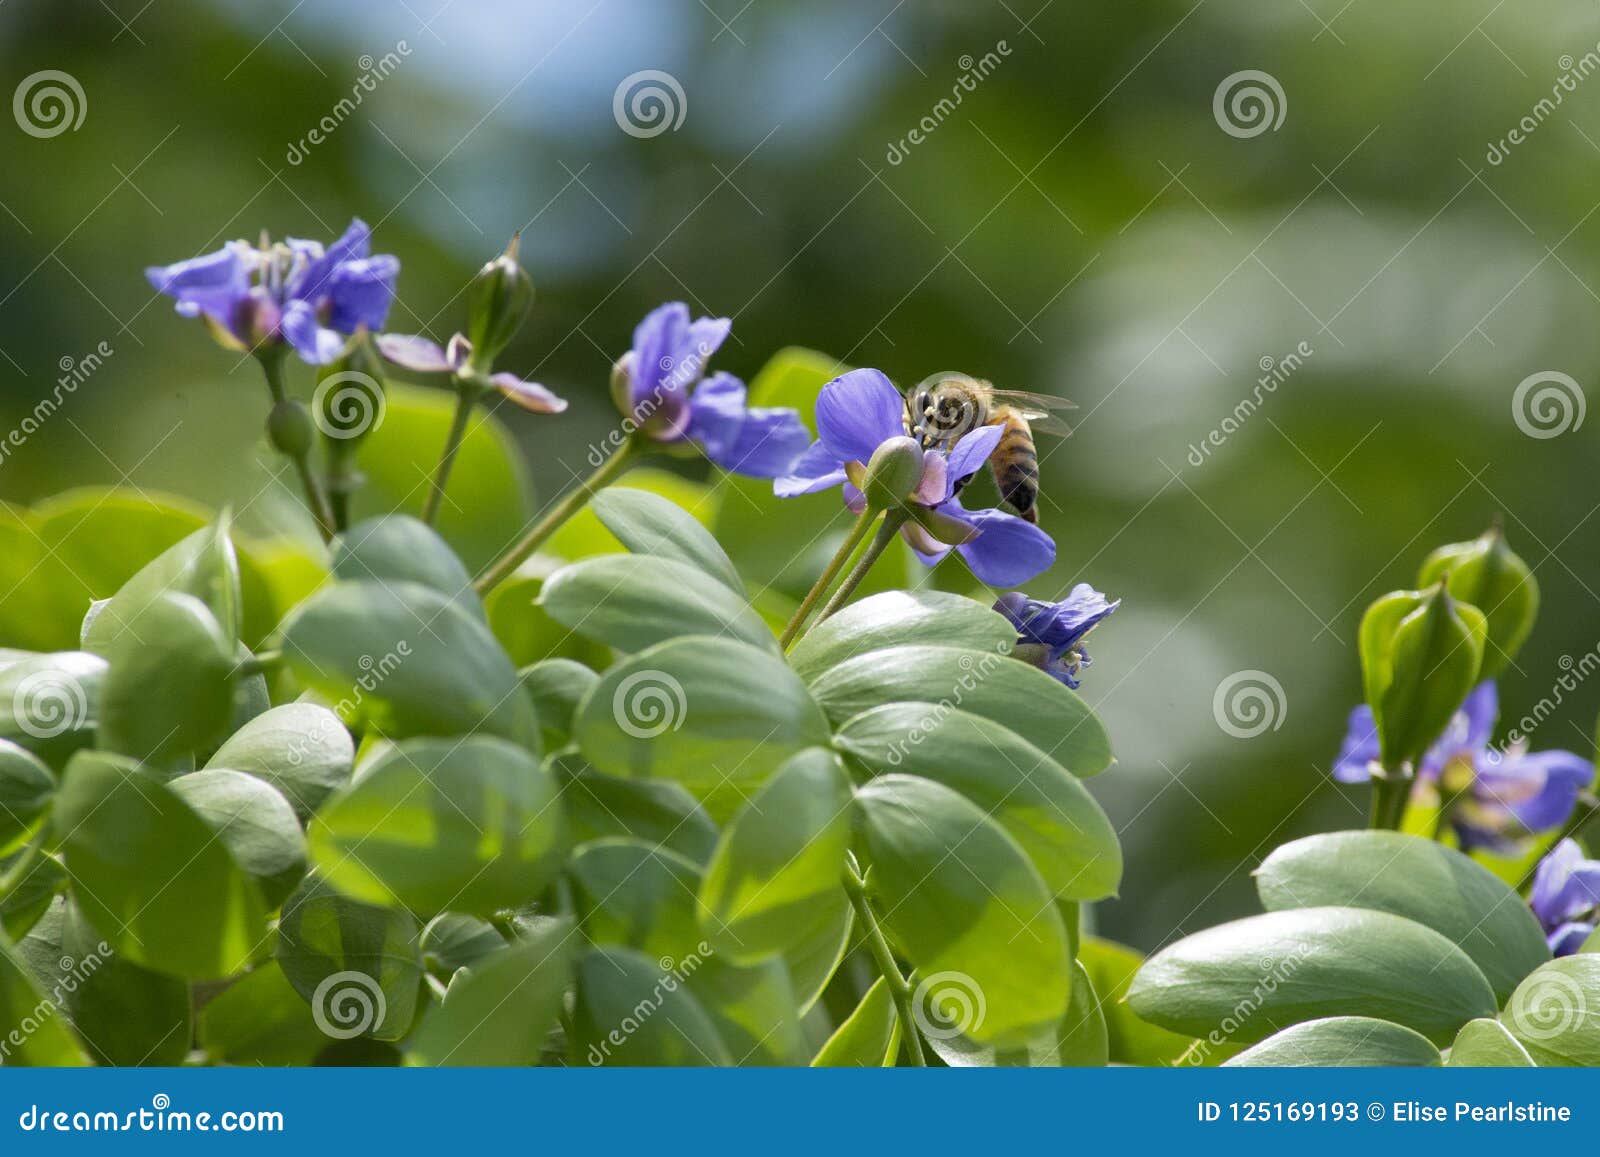 honeybee gathering pollen from the purple flowers of a lignum vitae tree